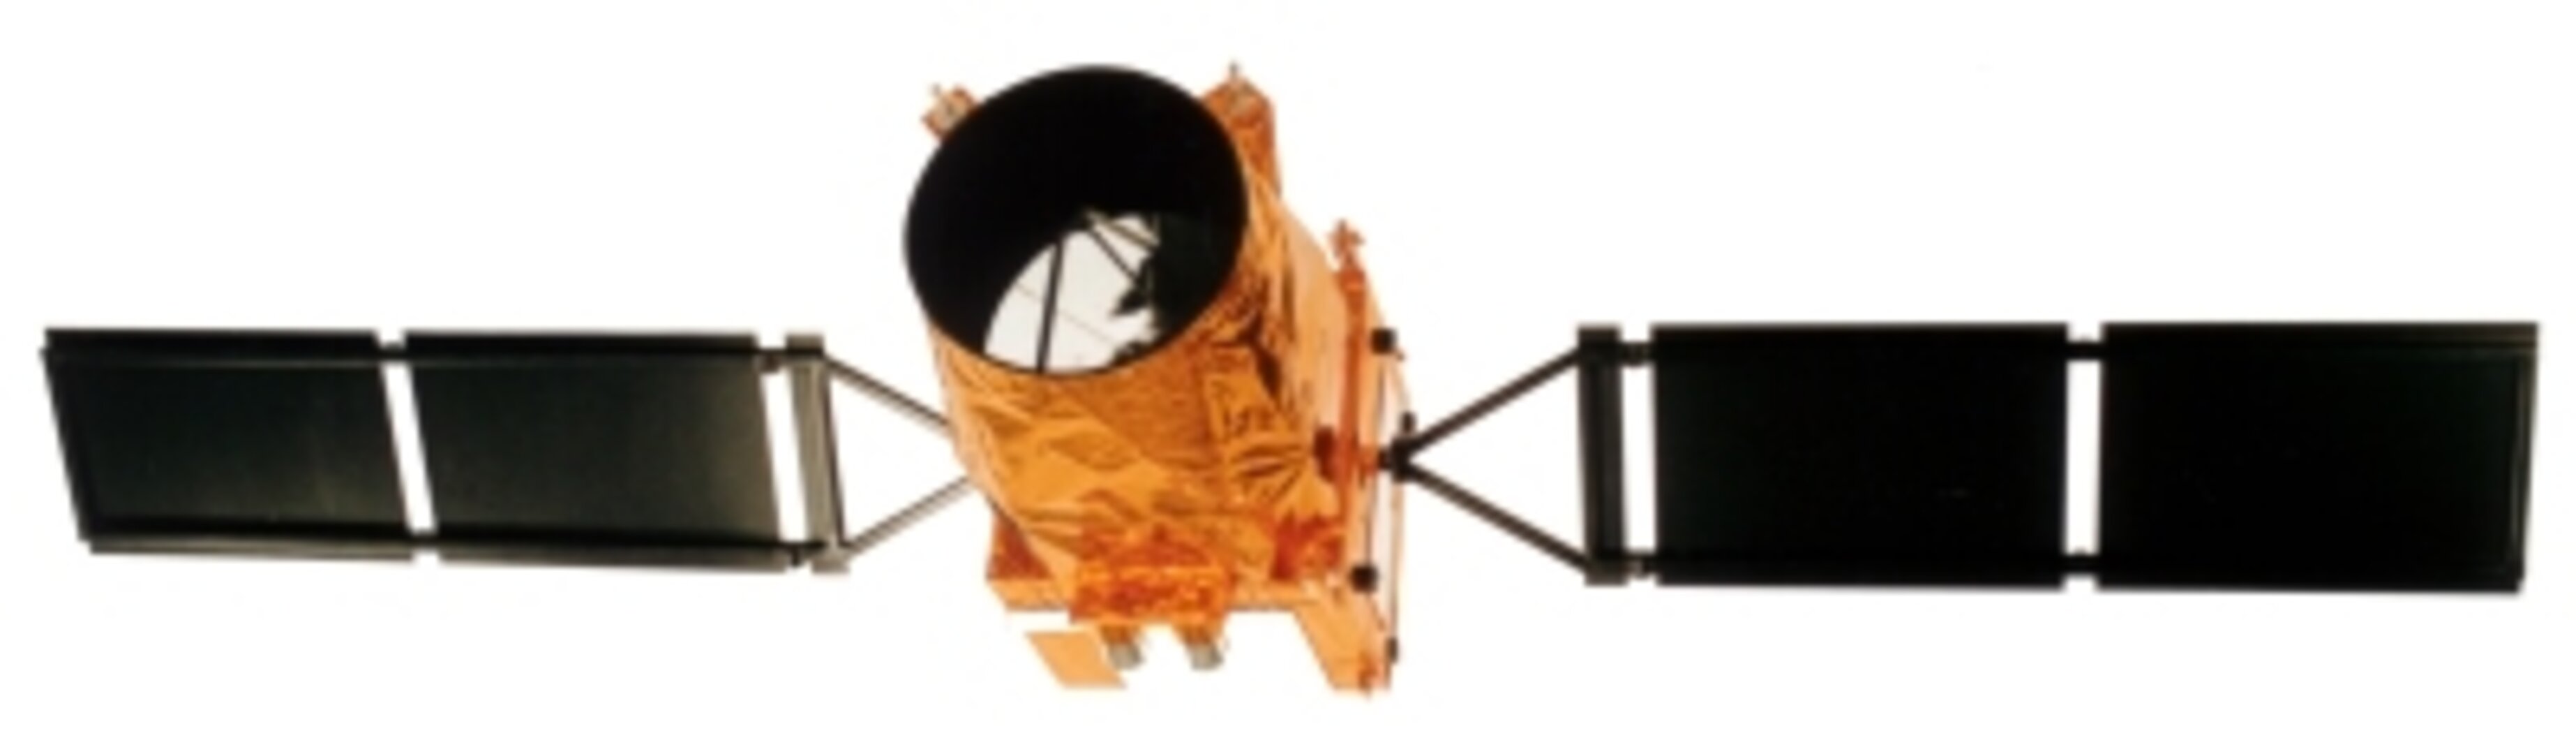 The ADM-Aeolus satellite as mock-up